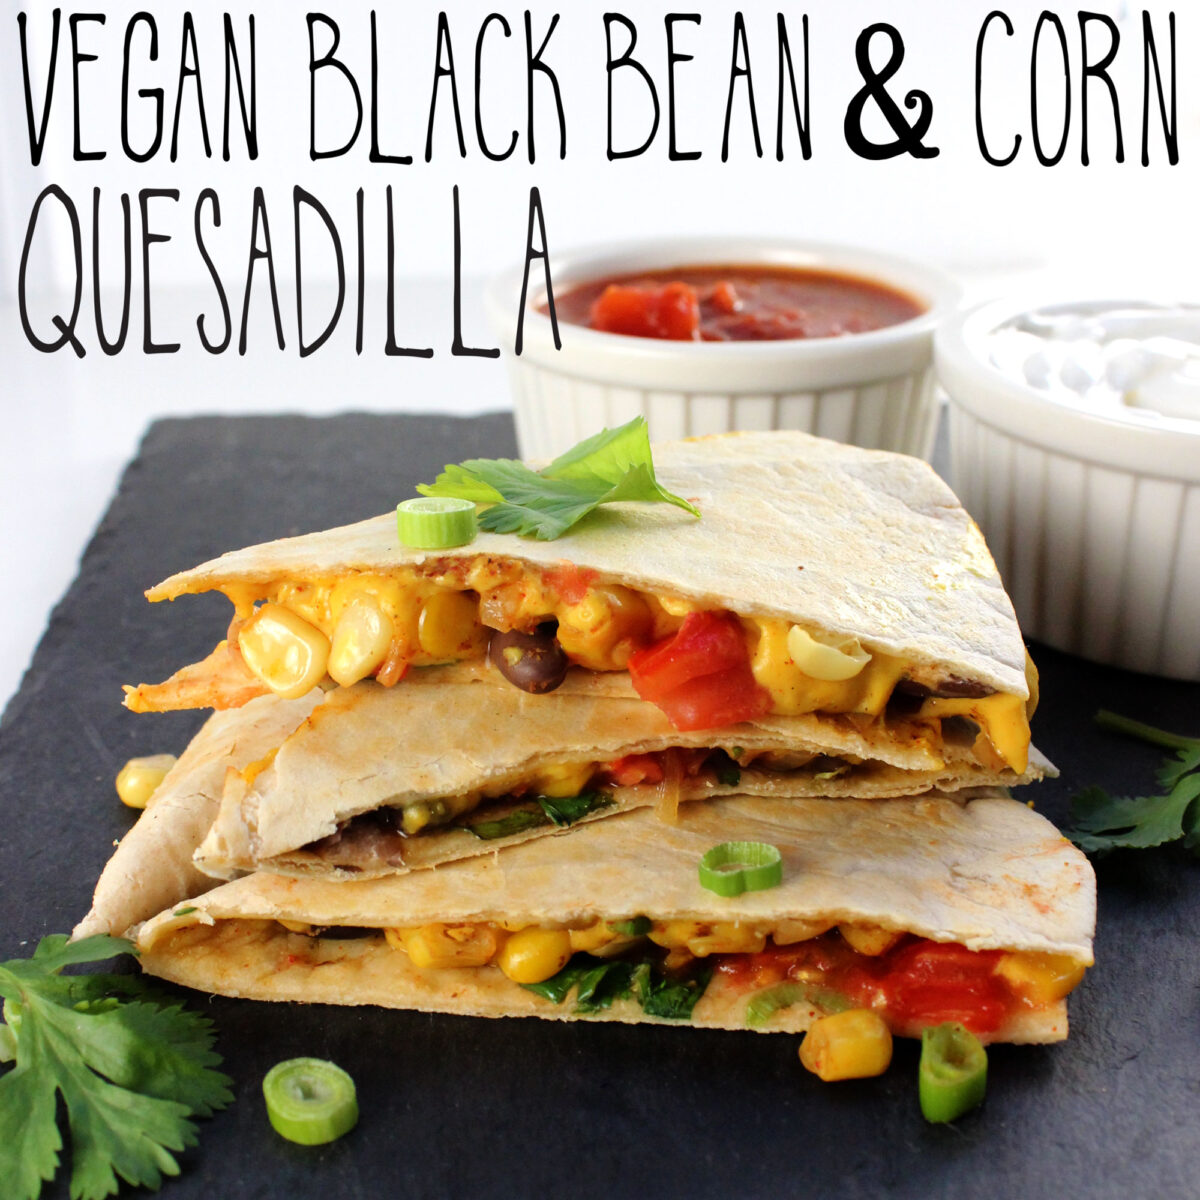 Vegan Black Bean & Corn Quesadilla